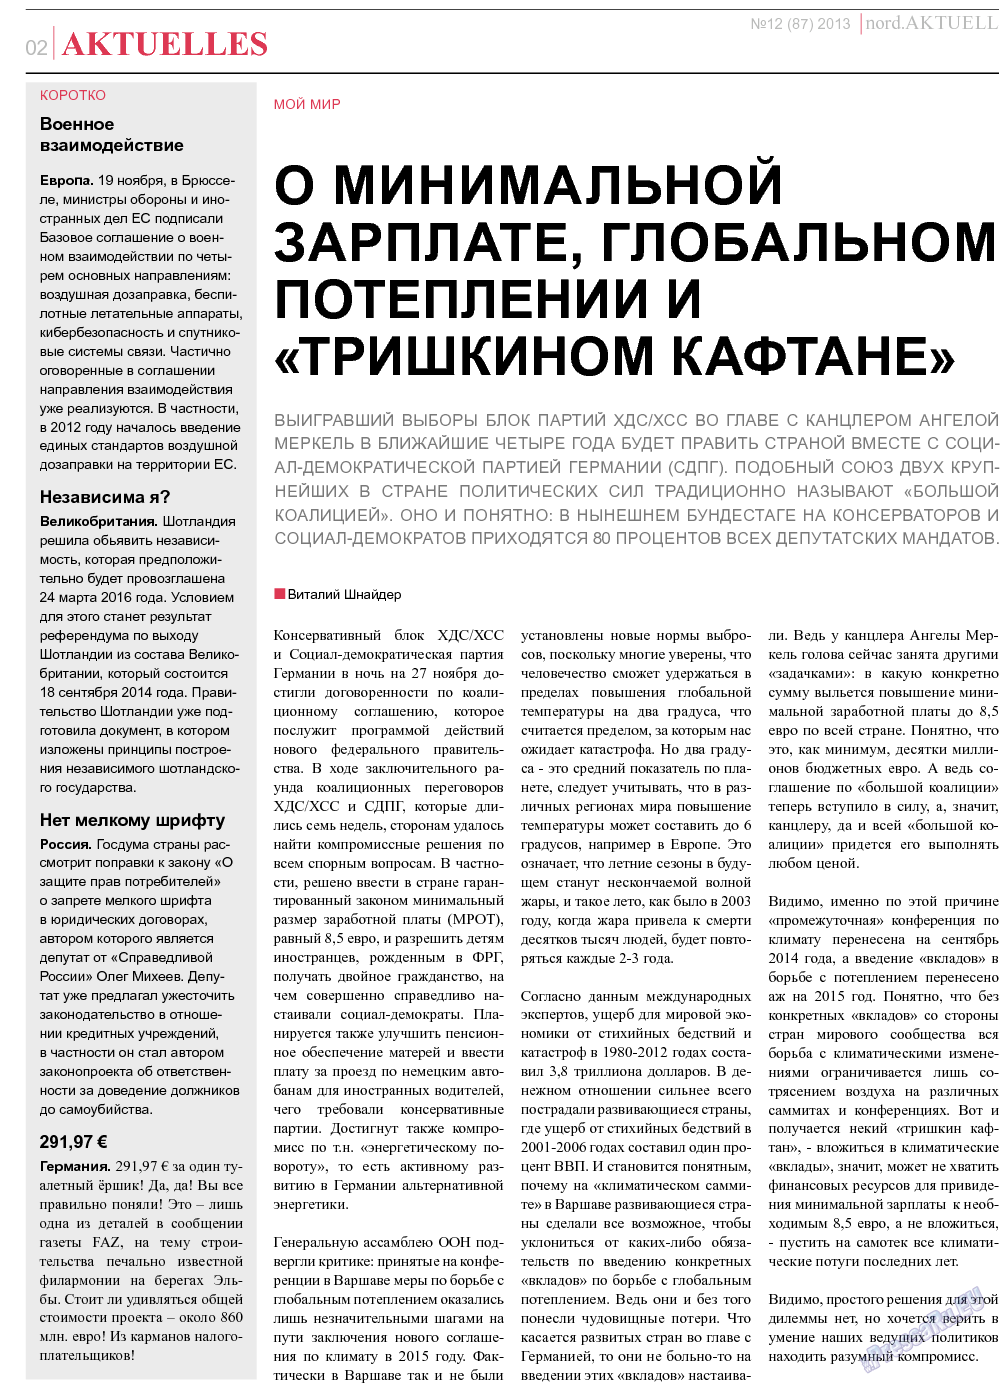 nord.Aktuell, газета. 2013 №12 стр.2